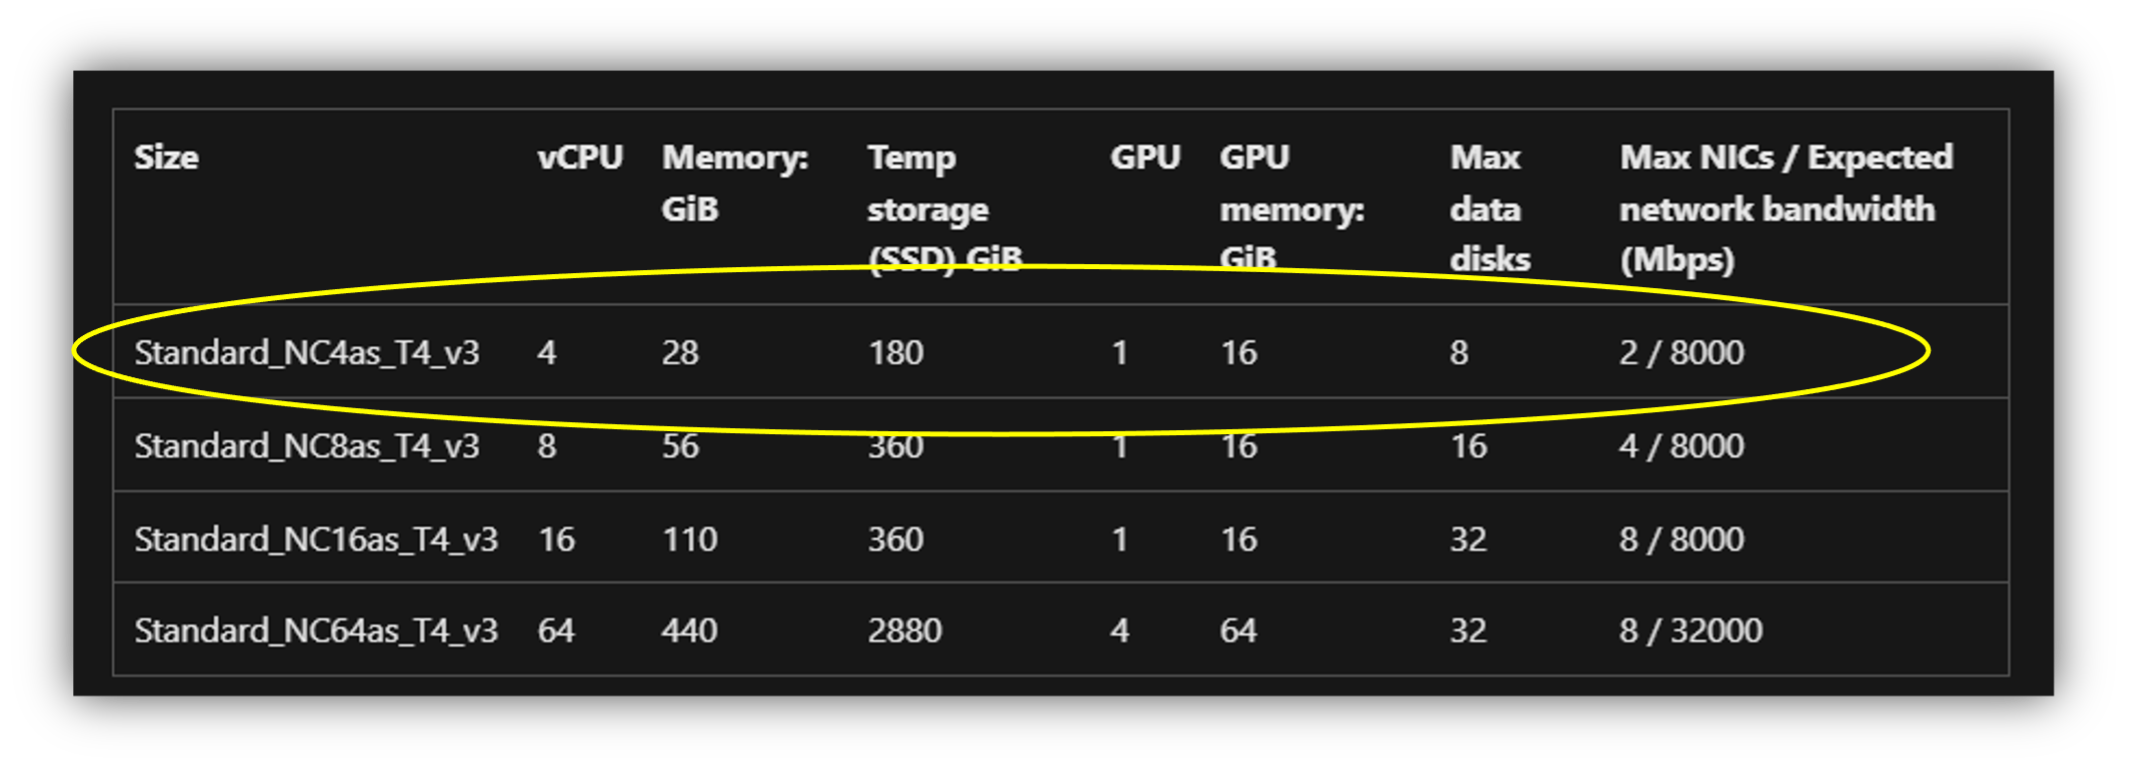 Figure 1:- GPU Machine Configuration